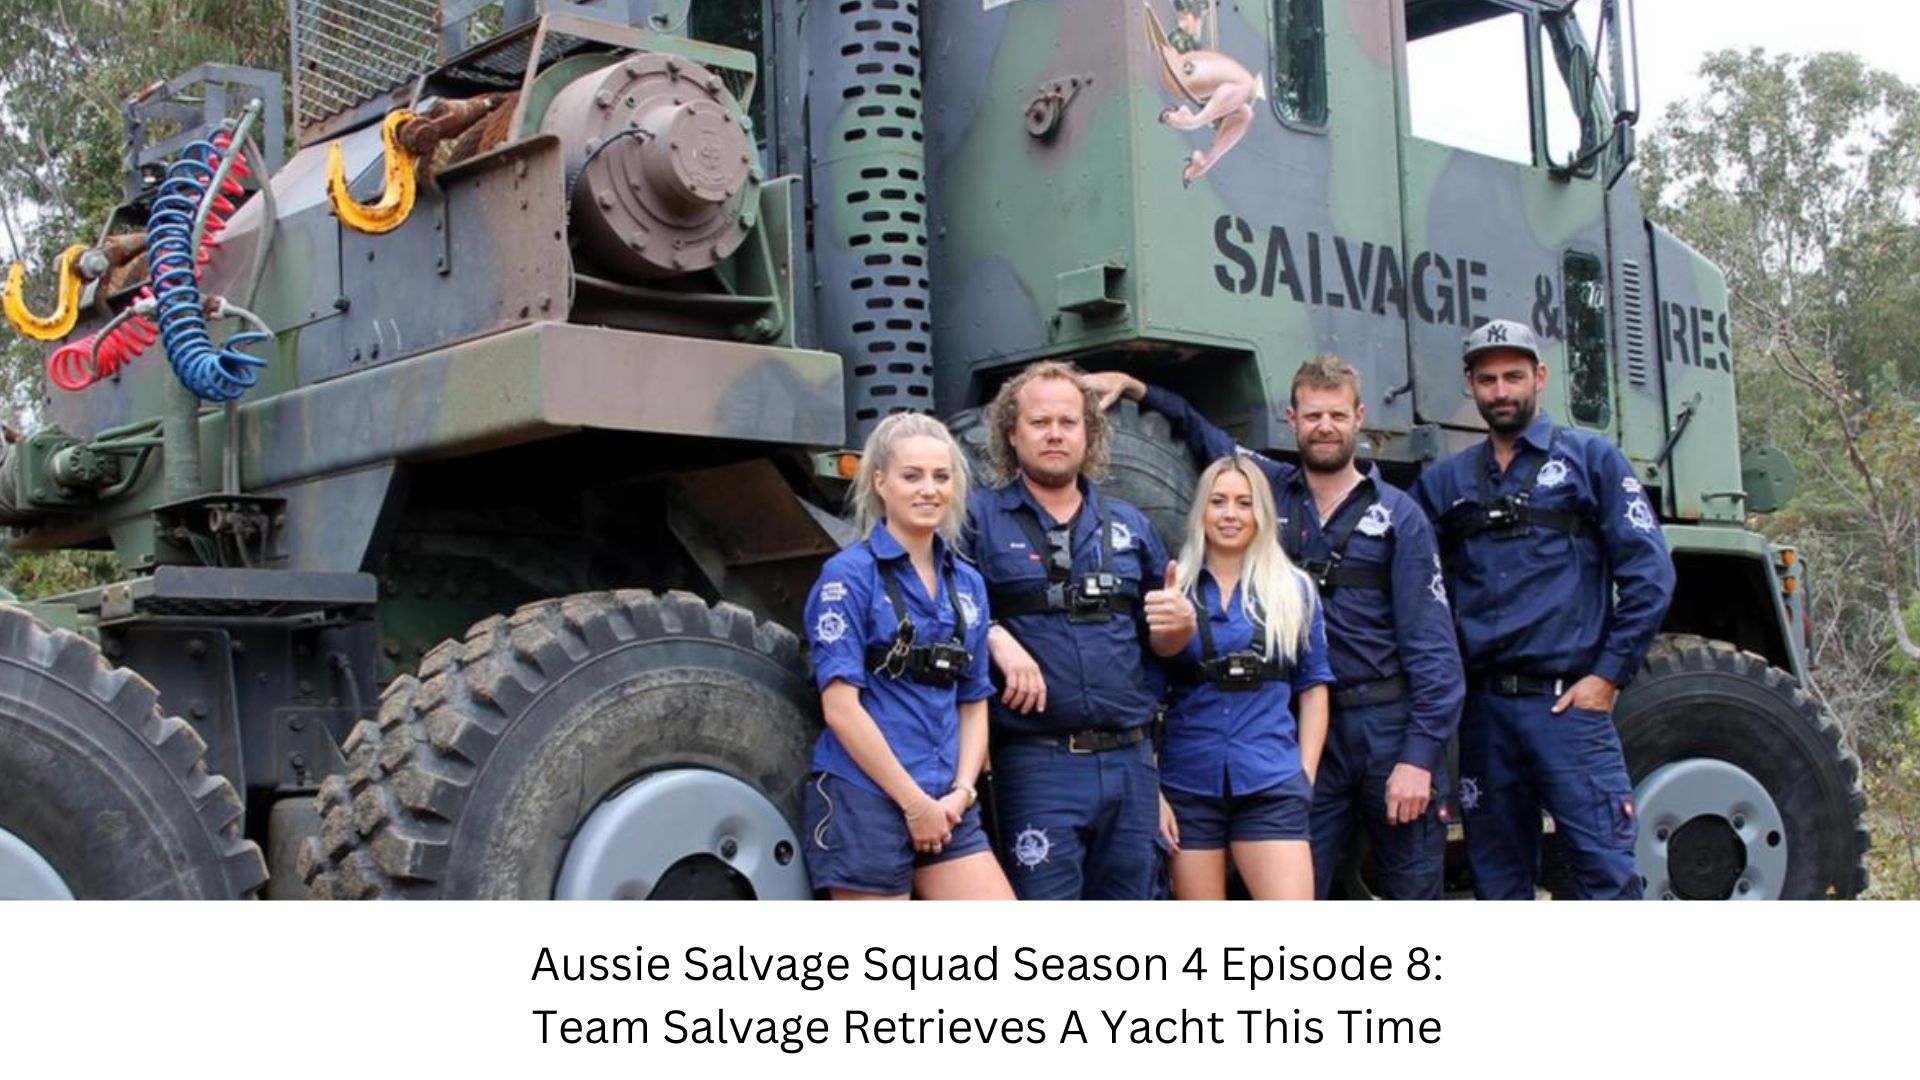 Aussie Salvage Squad Season 4 Episode 8: Team Salvage Retrieves A Yacht This Time